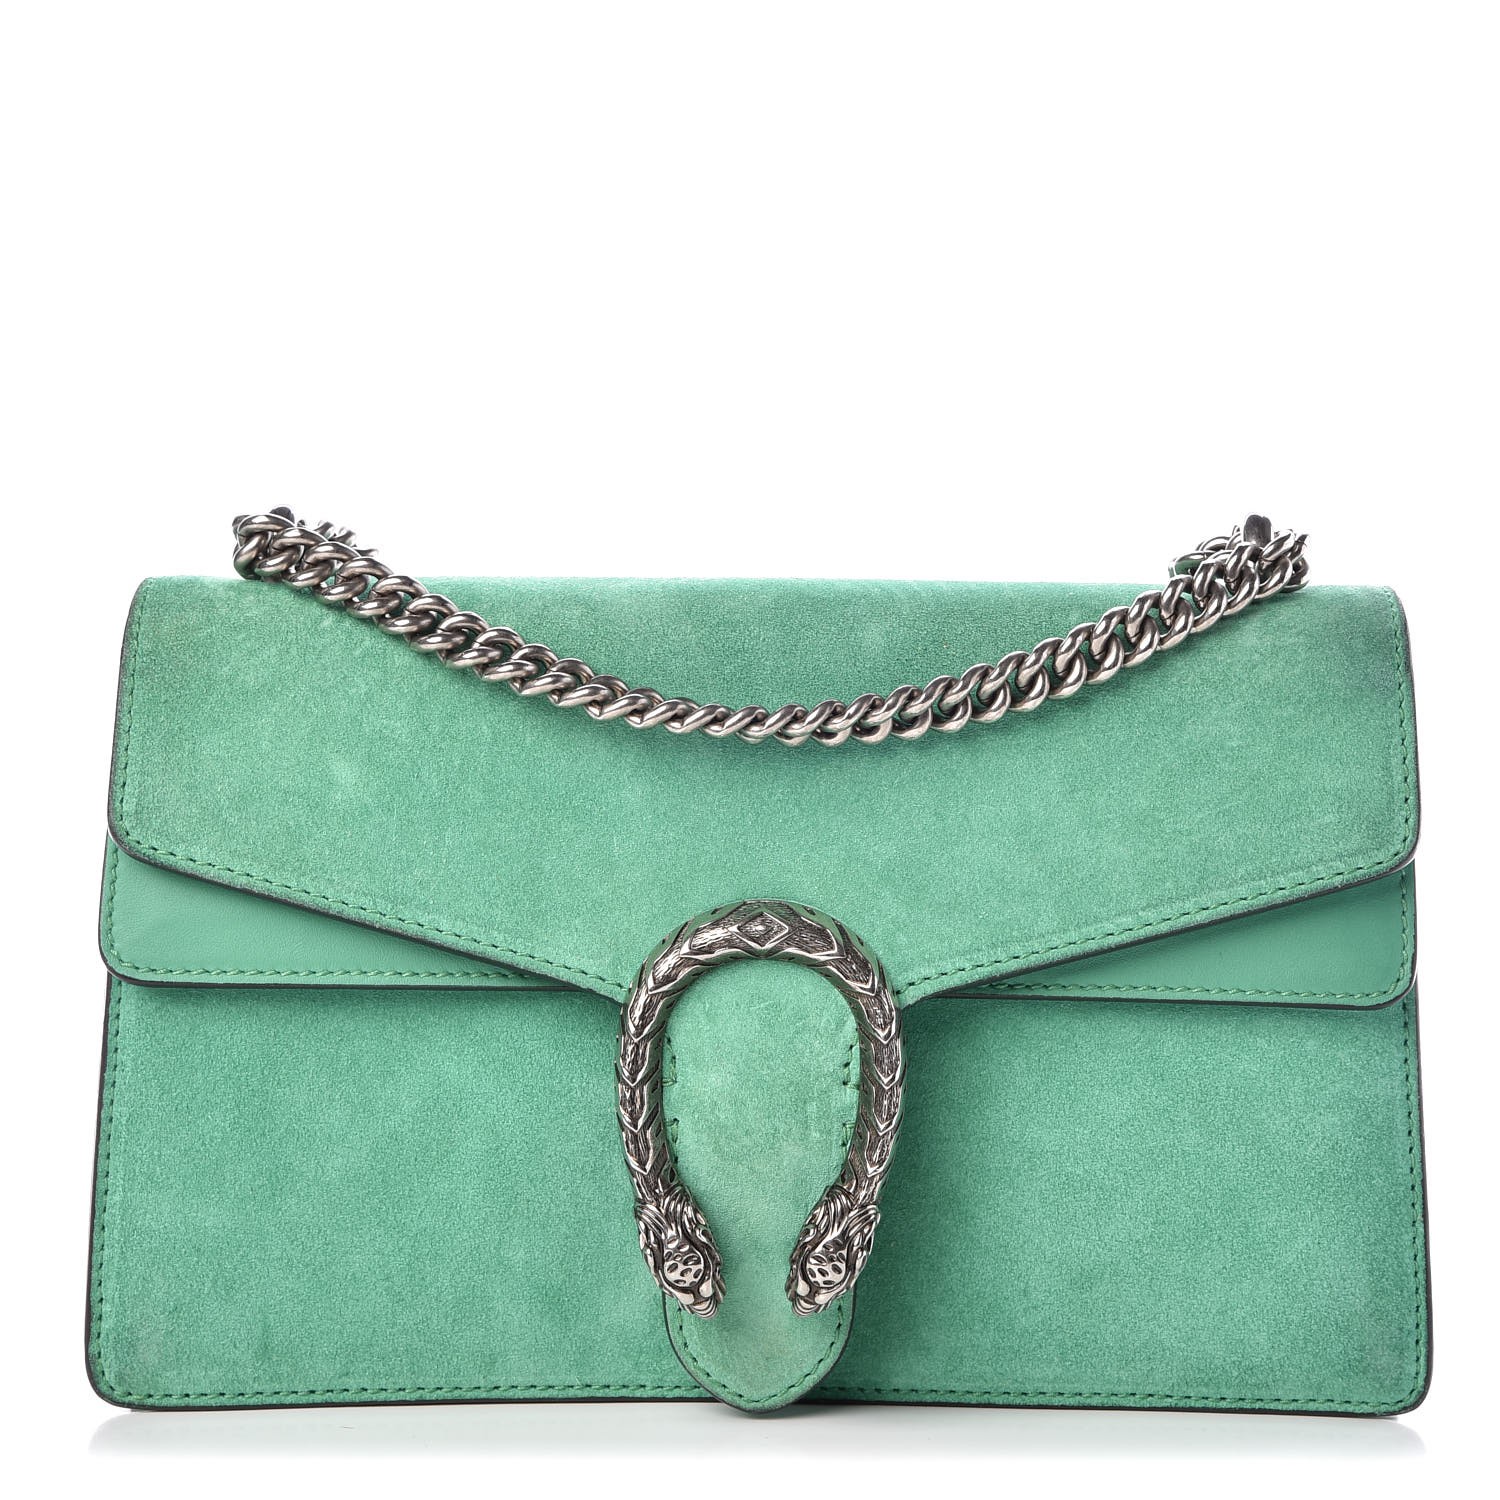 gucci dionysus bag green